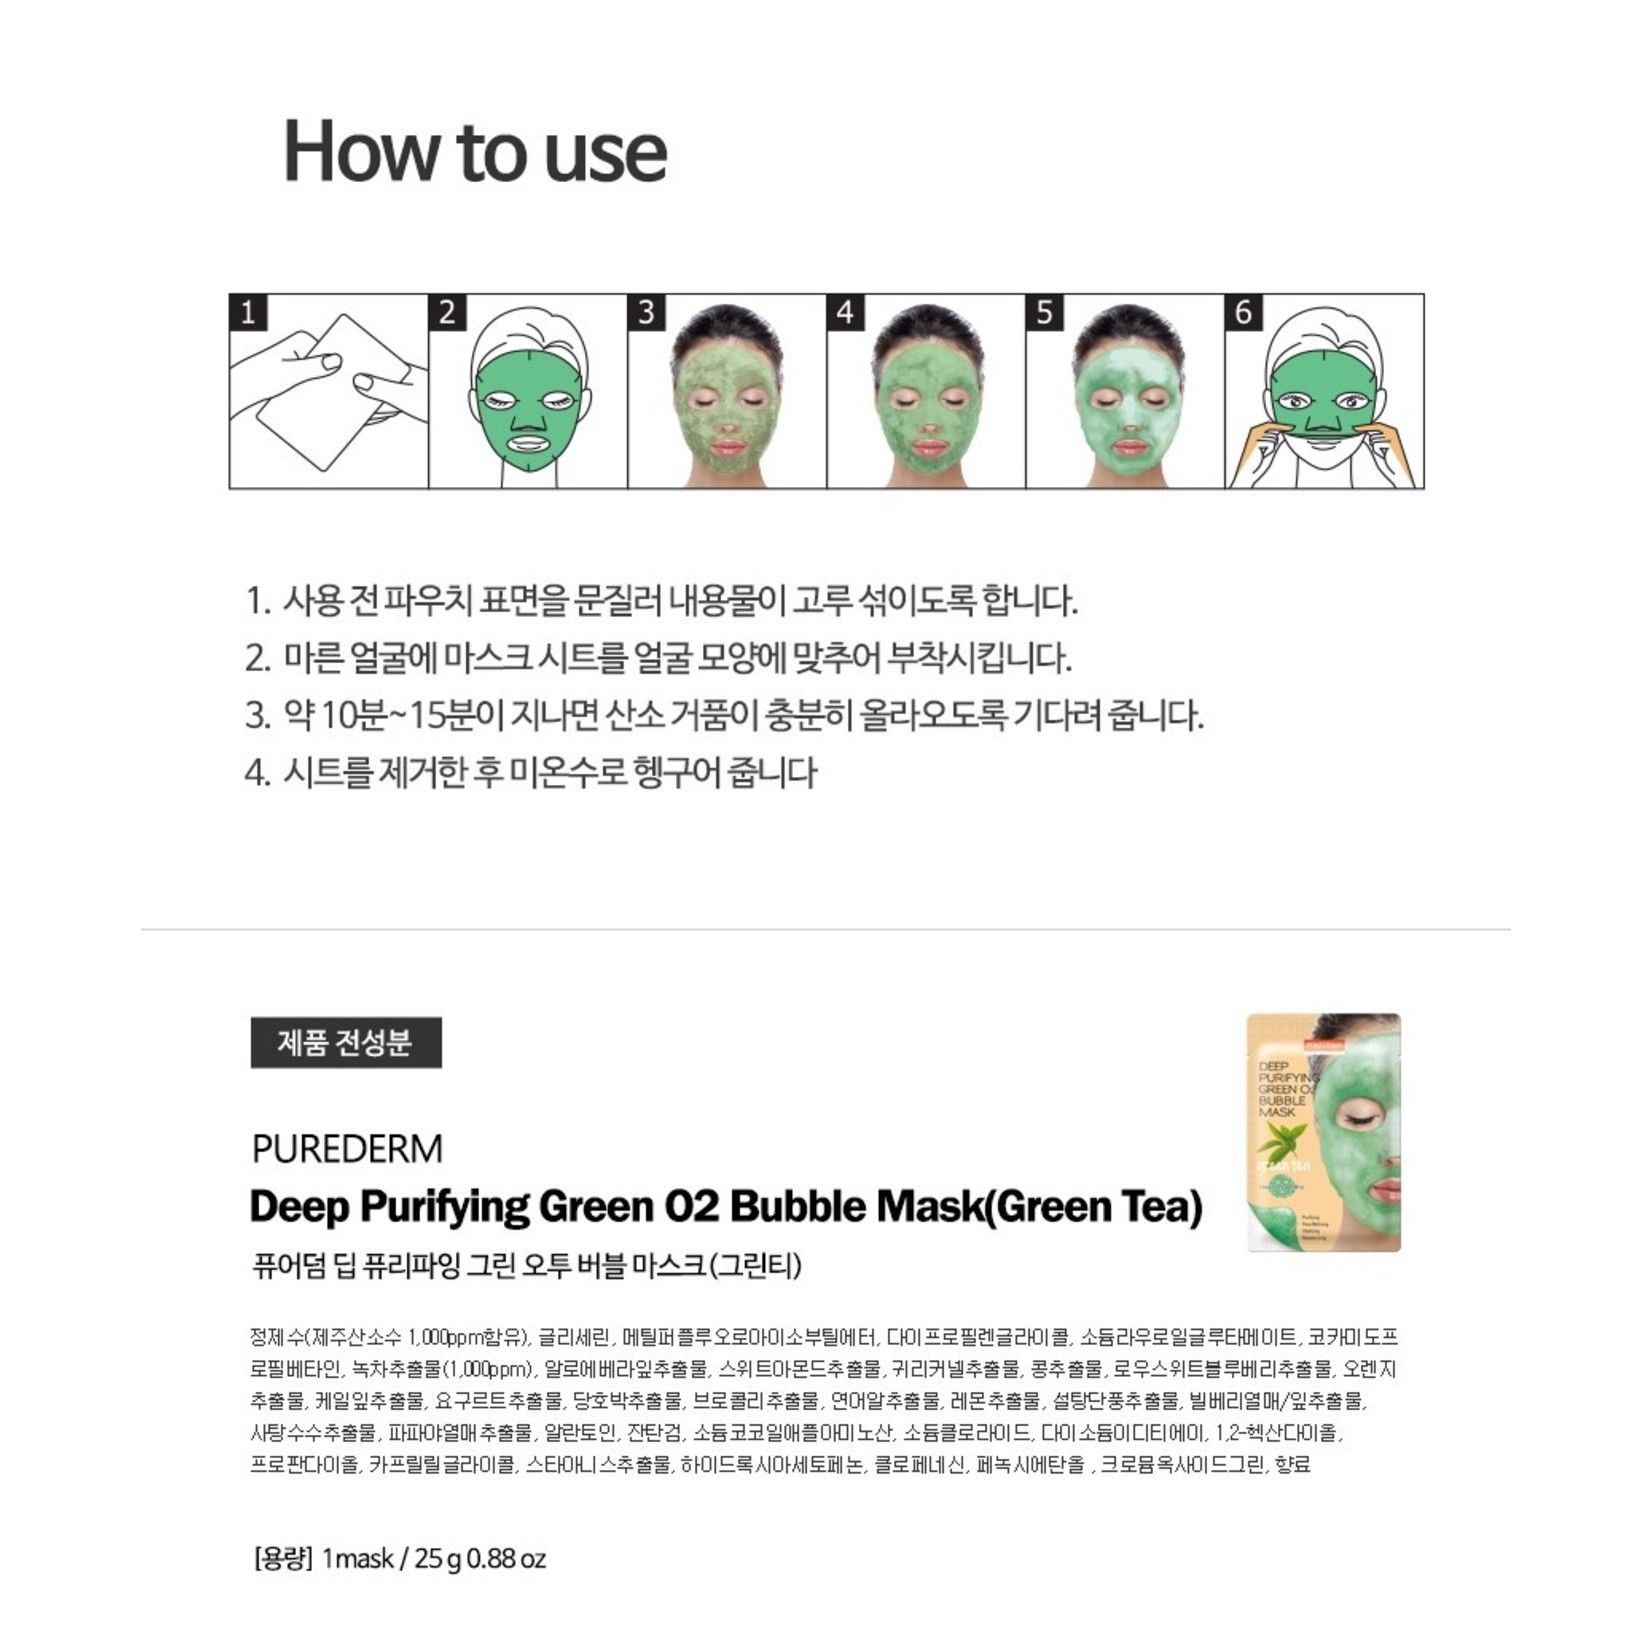 PUREDERM Deep Purifying Green O2 Bubble Mask (Green Tea)